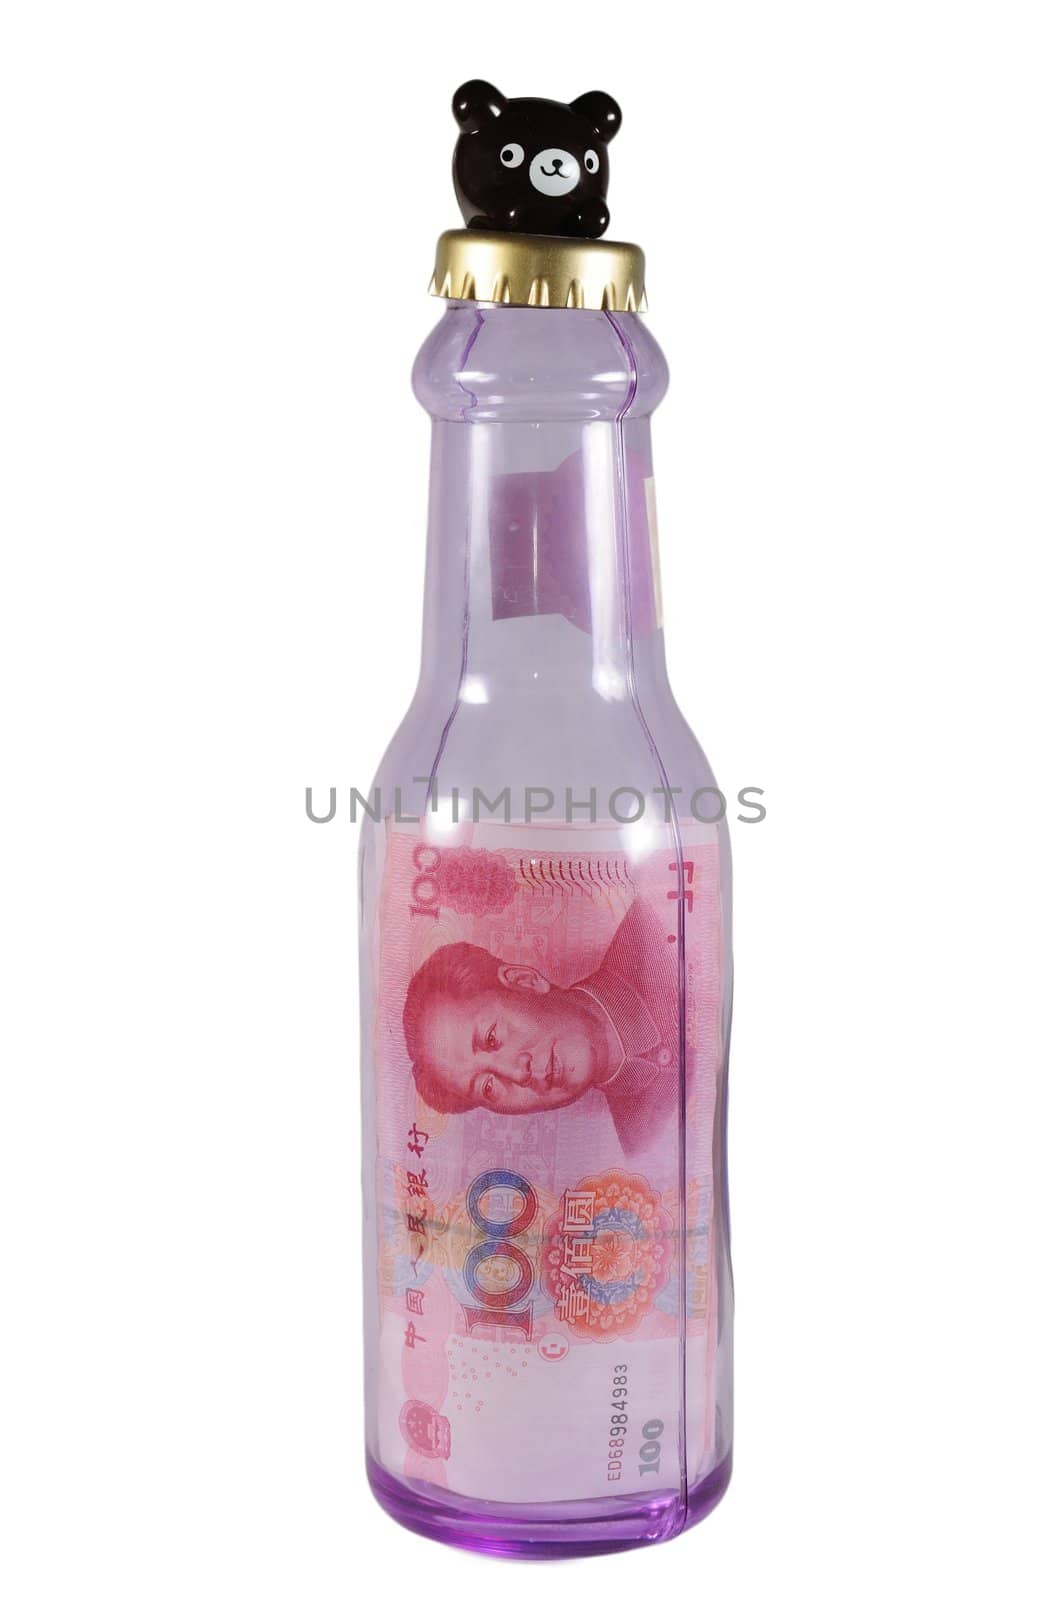 Money bottle by raywoo